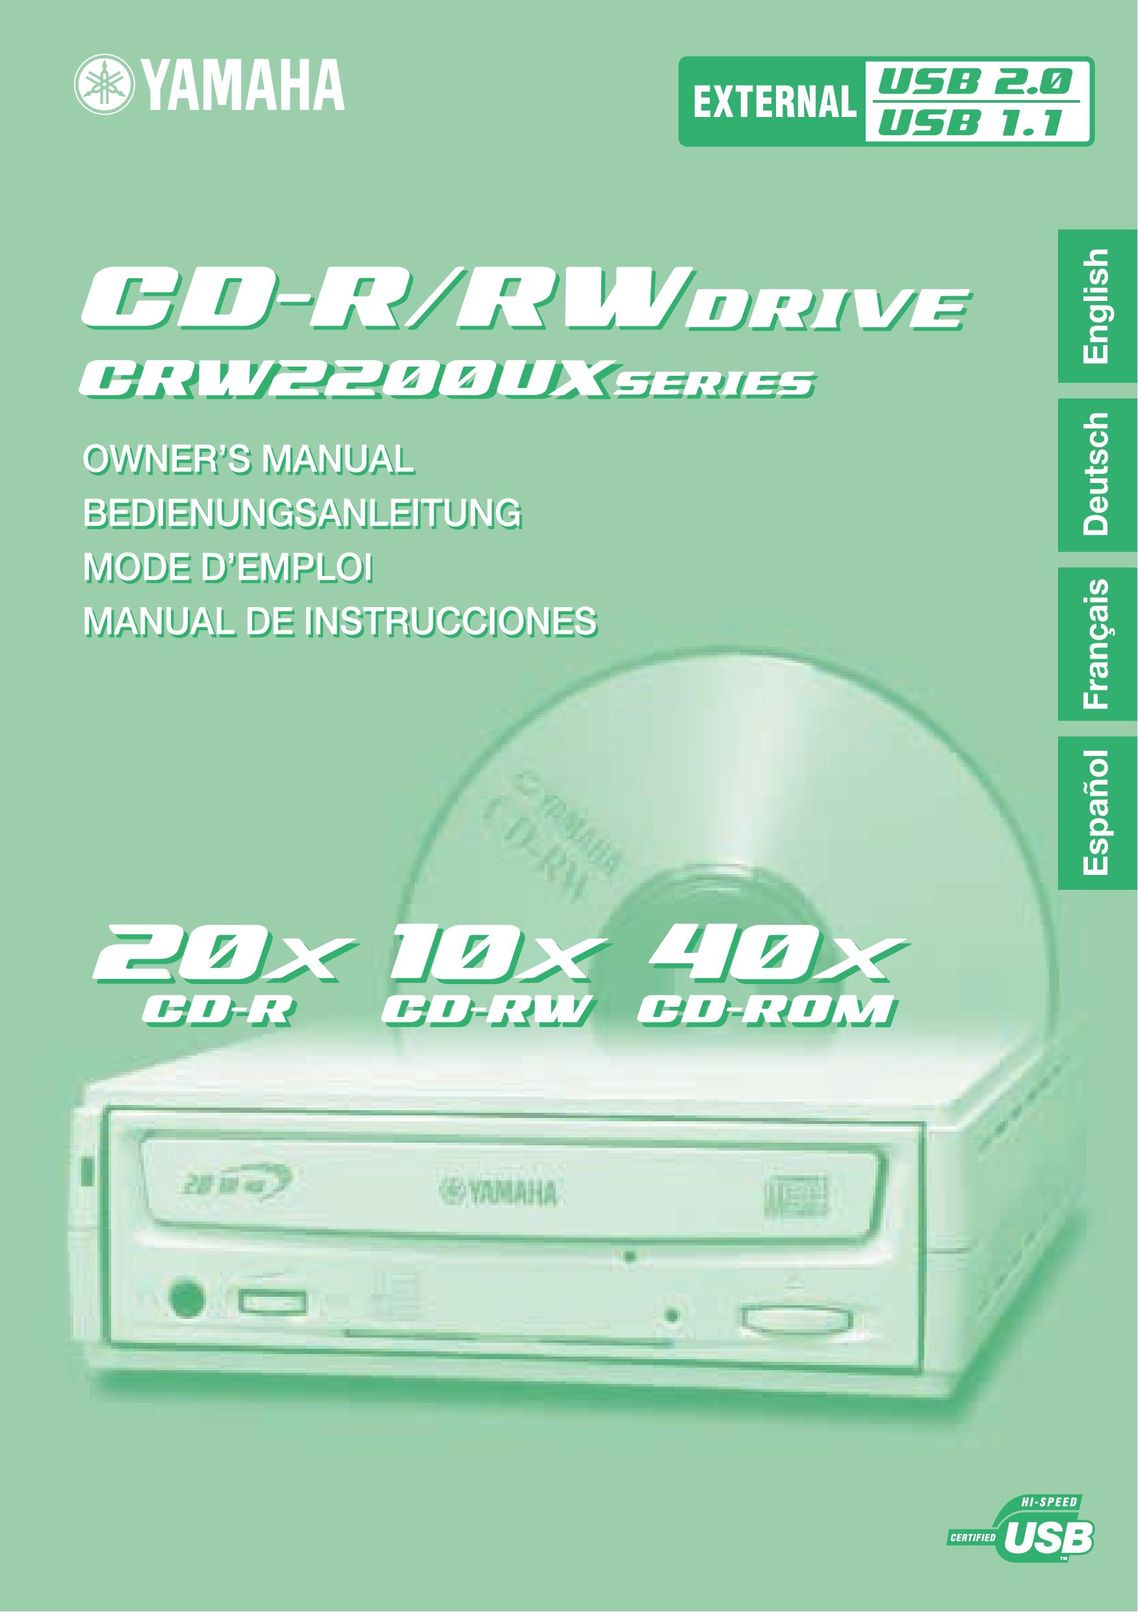 Yamaha CRW2200UX Computer Drive User Manual